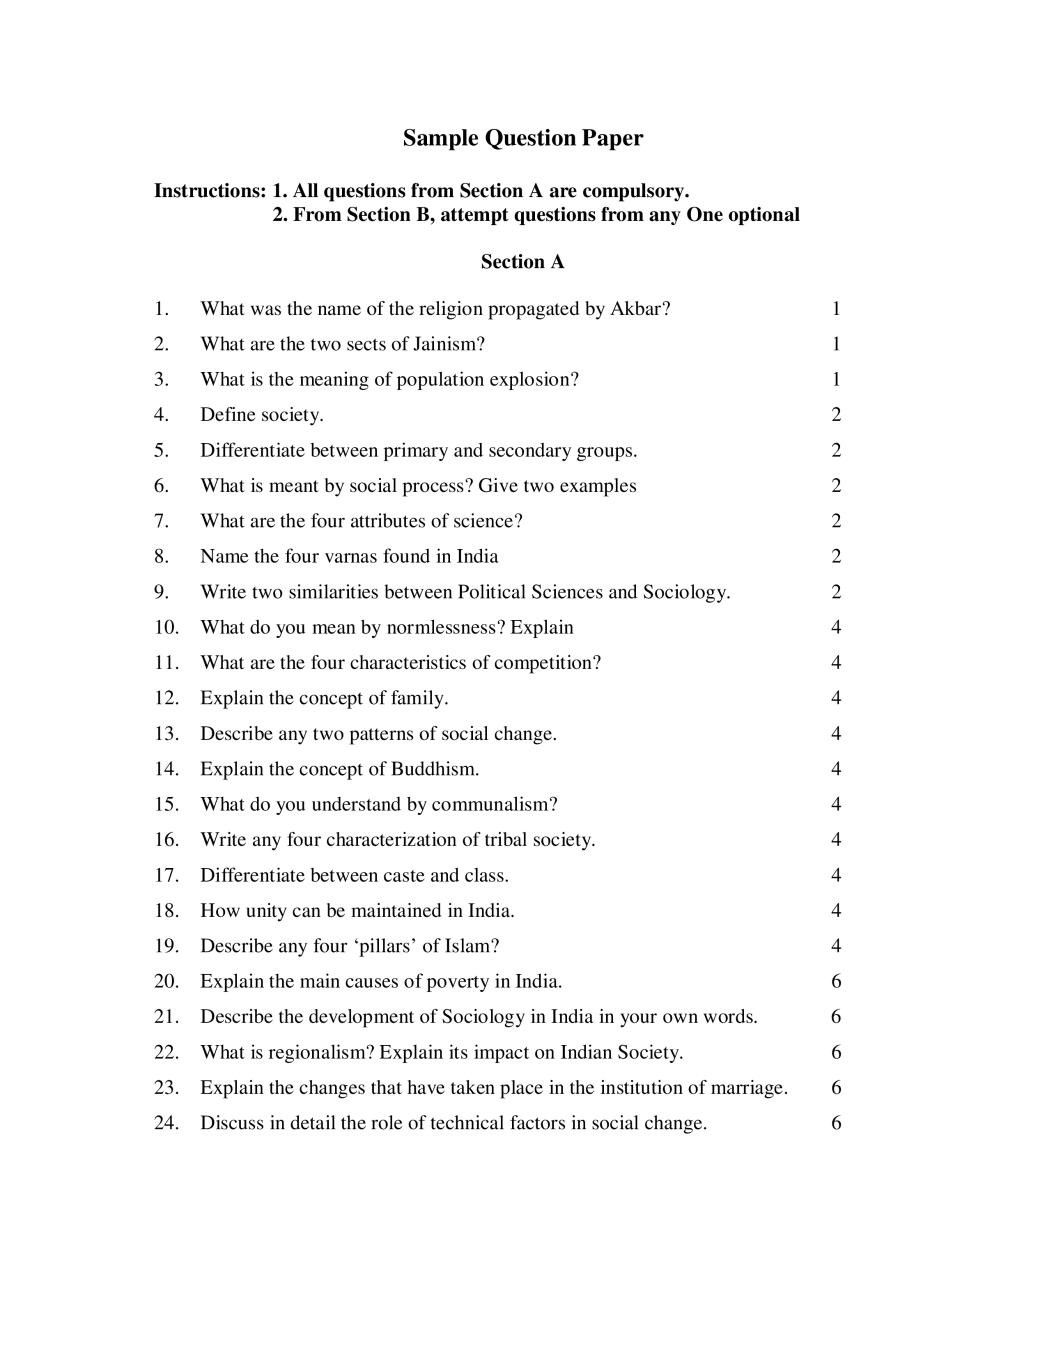 NIOS Class 12 Sample Paper 2020 - Sociology - Page 1